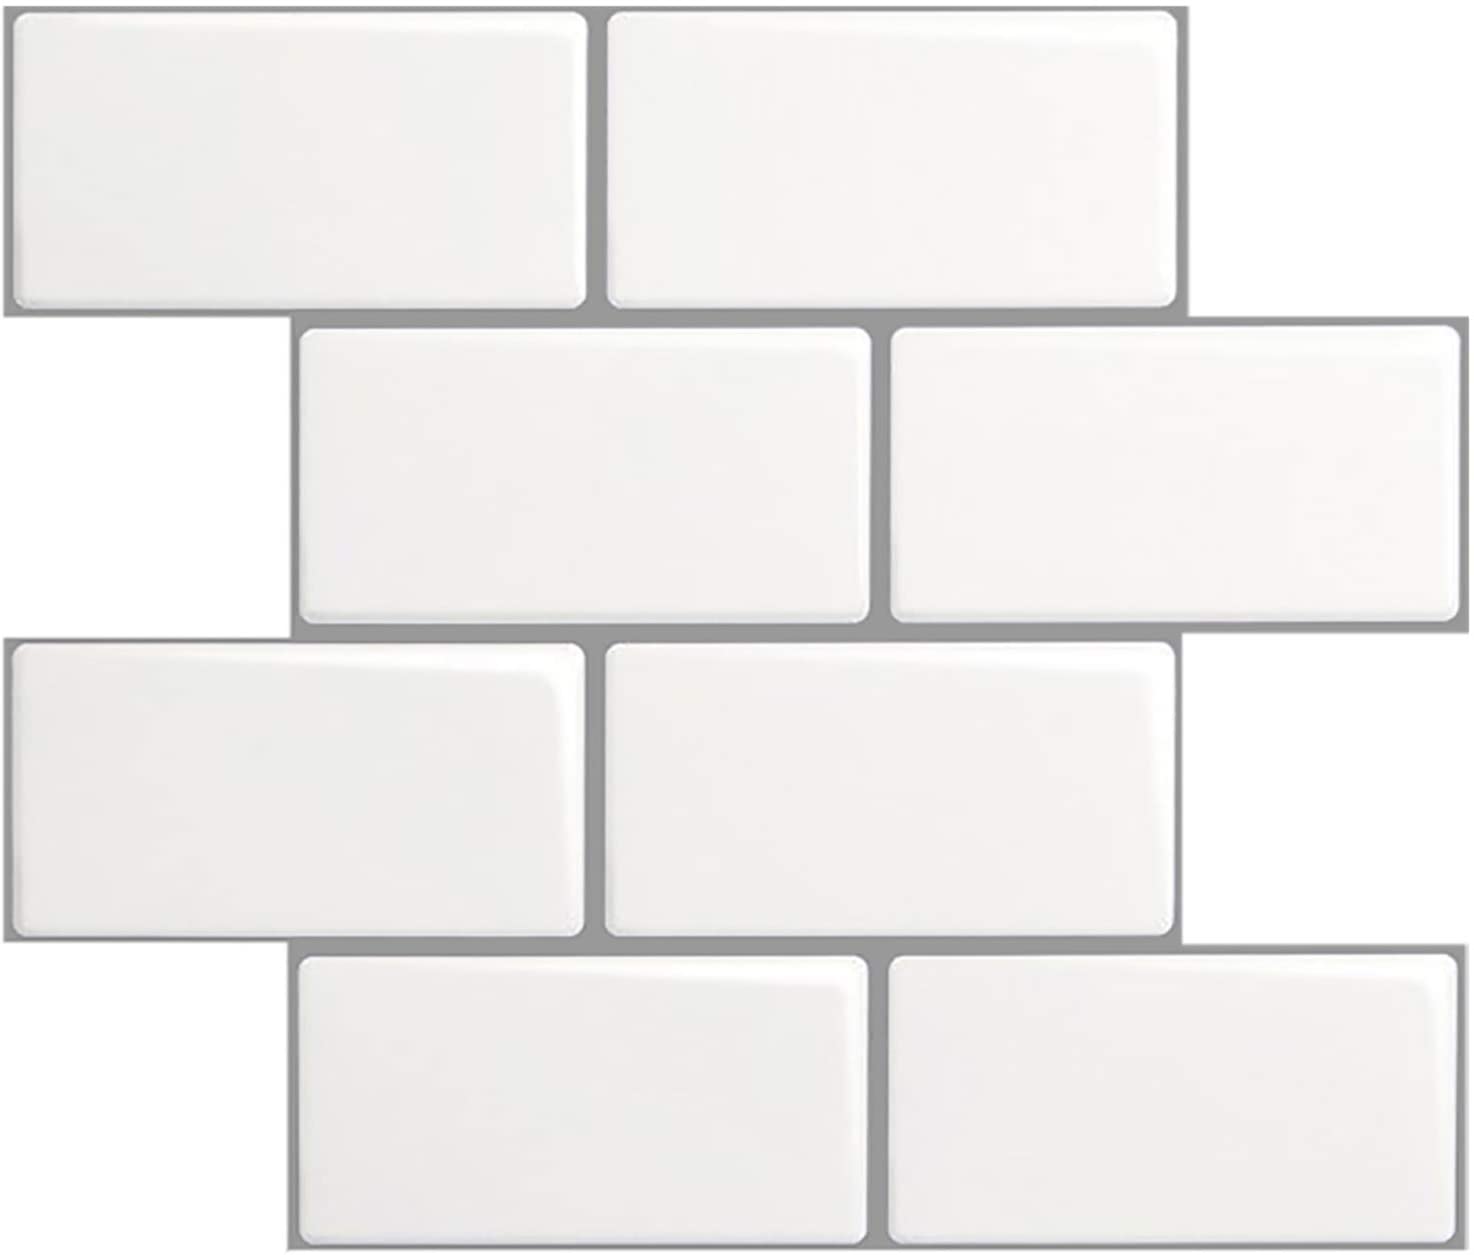 A17601 -10 SF Self-Adhesive Backsplash Tiles, Faux Marble Tiles